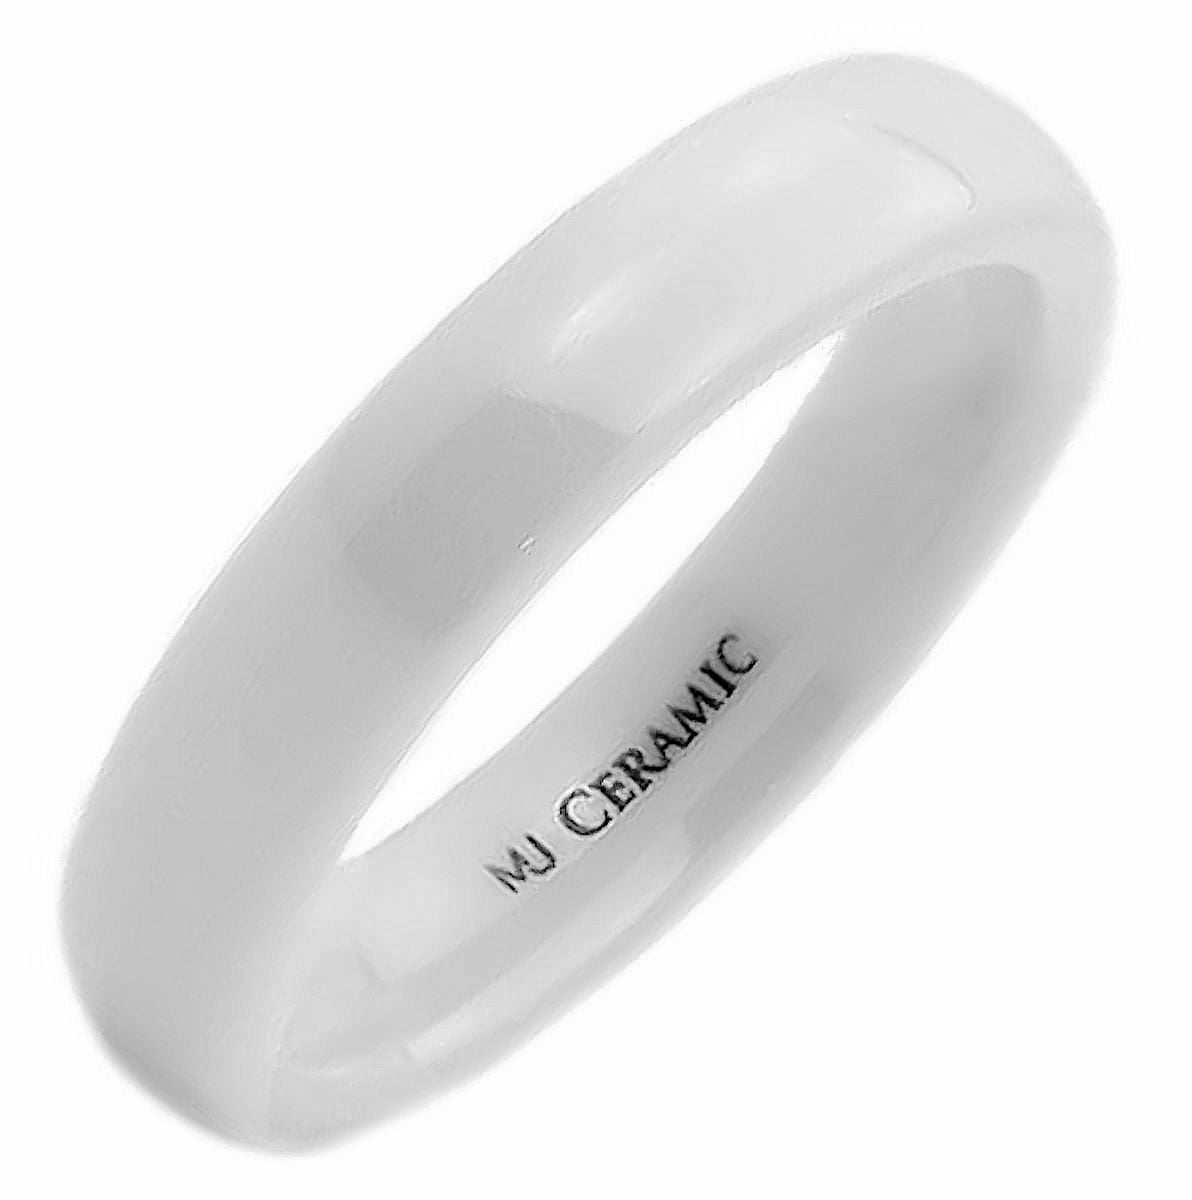 6mm Engagement White Ceramic Women Men's Wedding Band Ring Comfort Size 6-12 